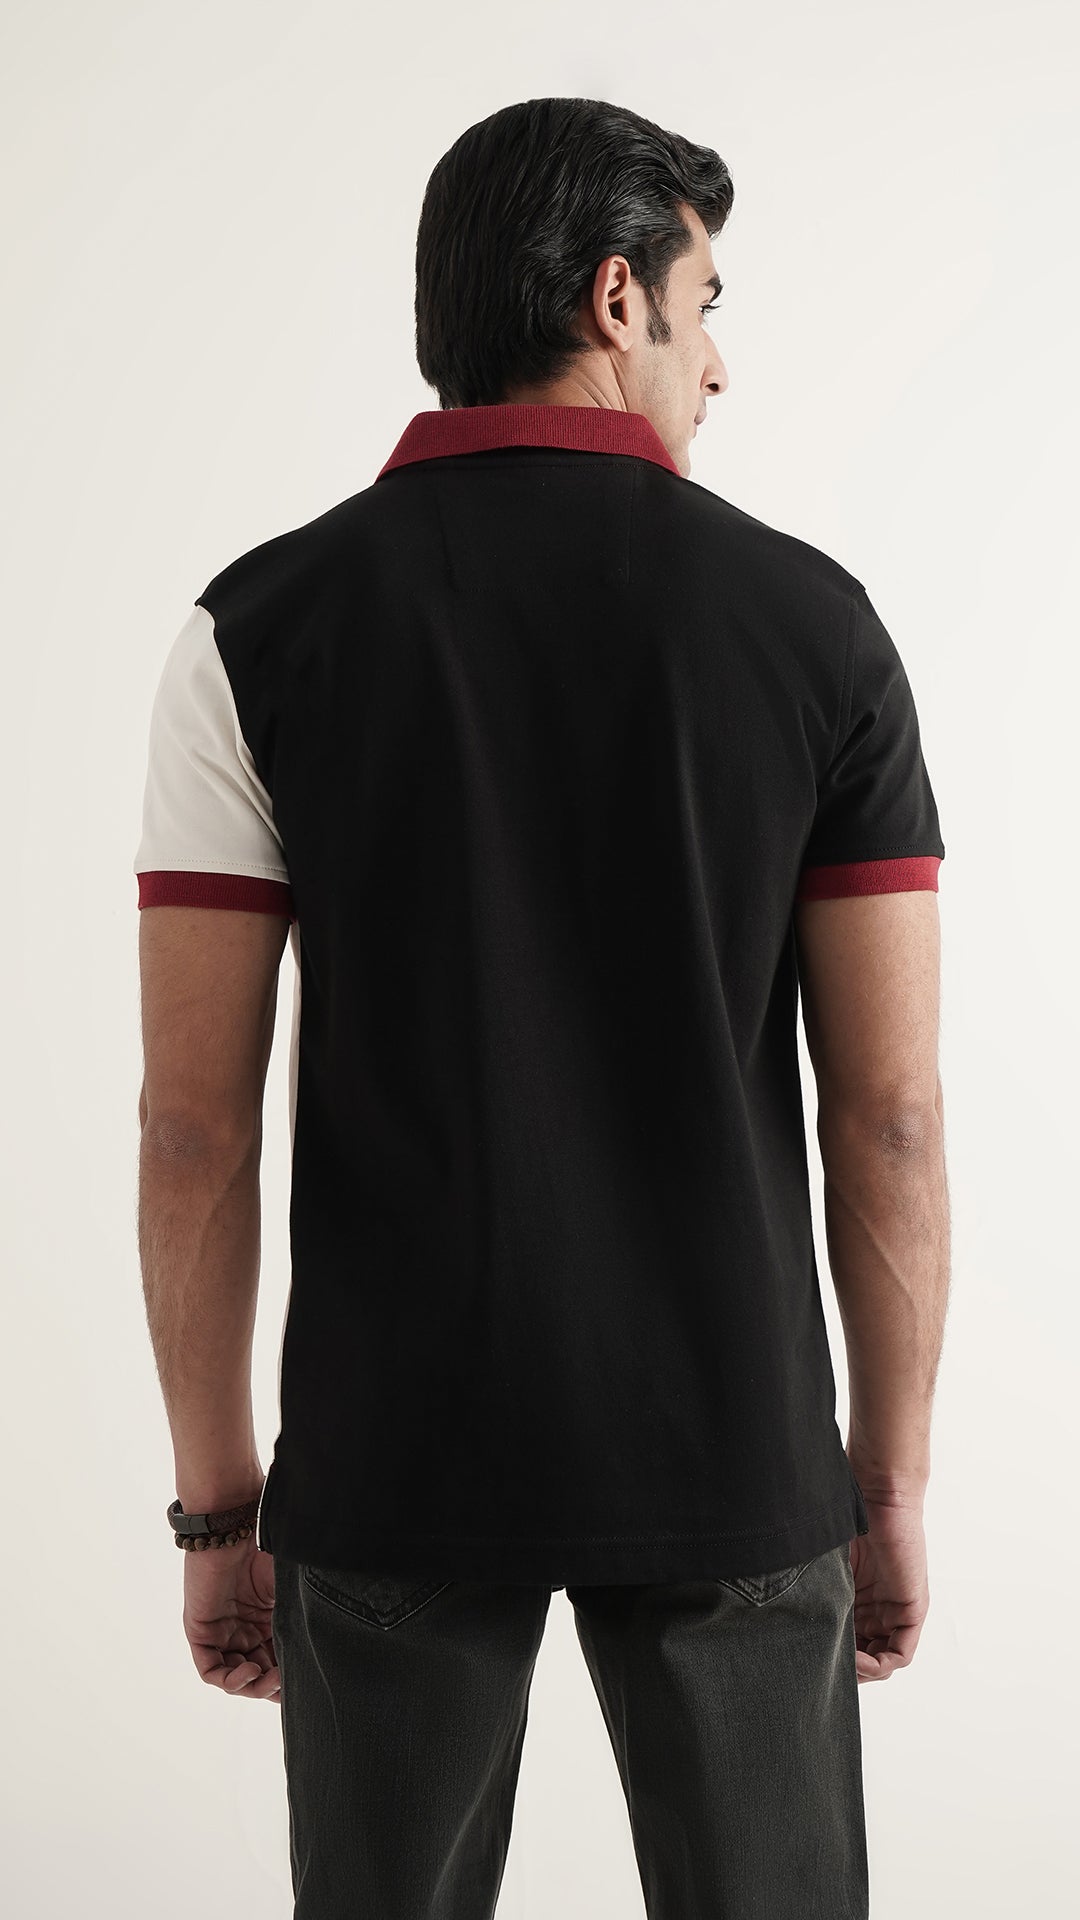 Markhor Dark Red, Black and White Fashion Interlock Polo